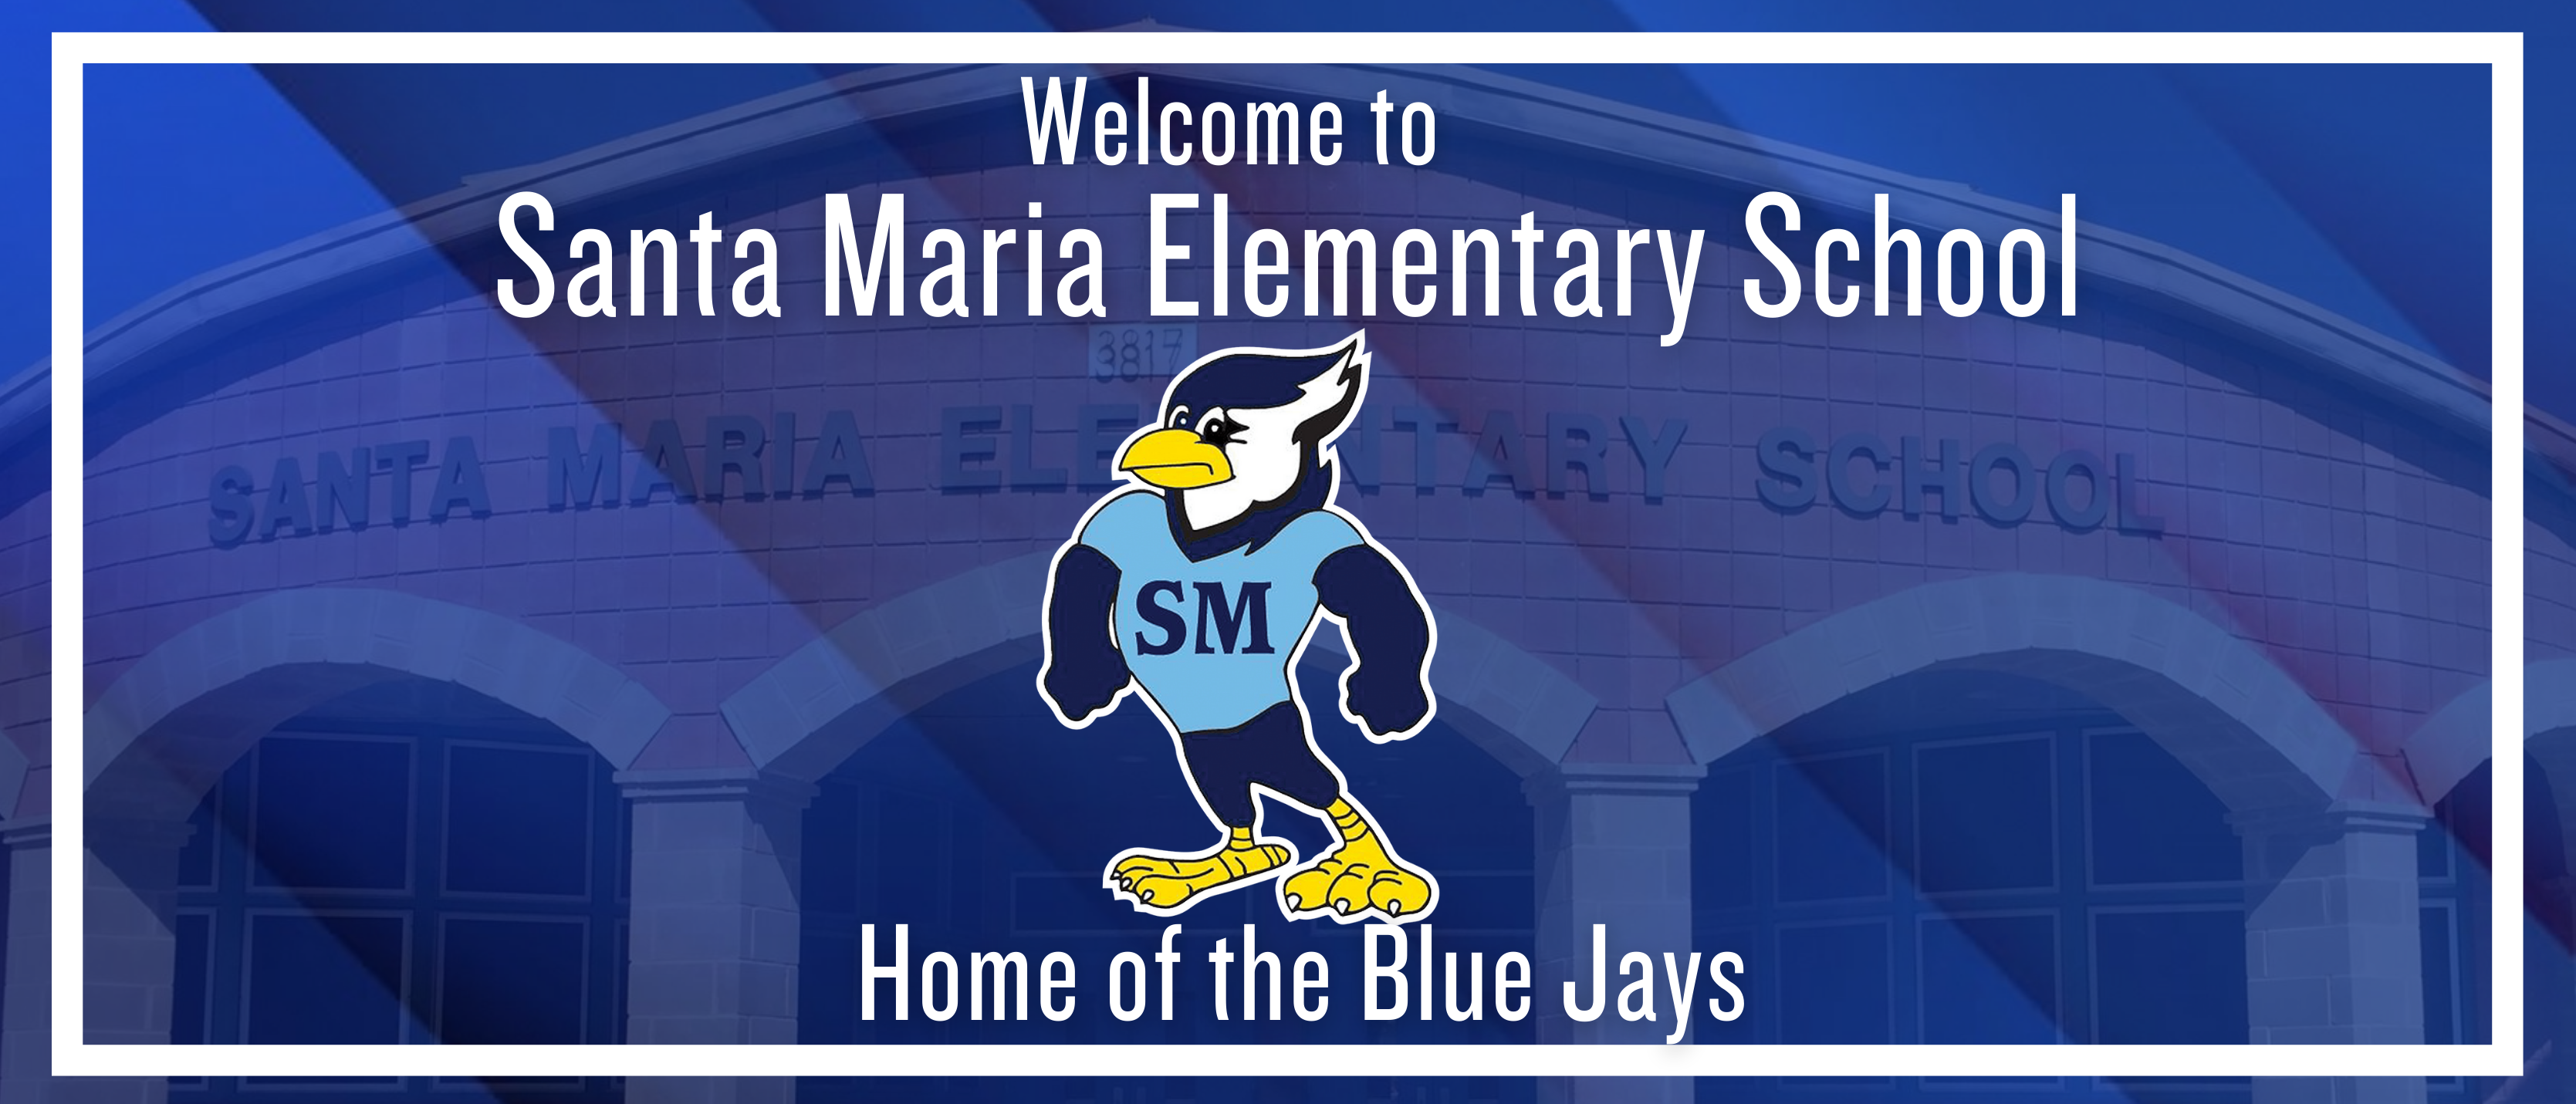 Welcome to Santa Maria Elementary School